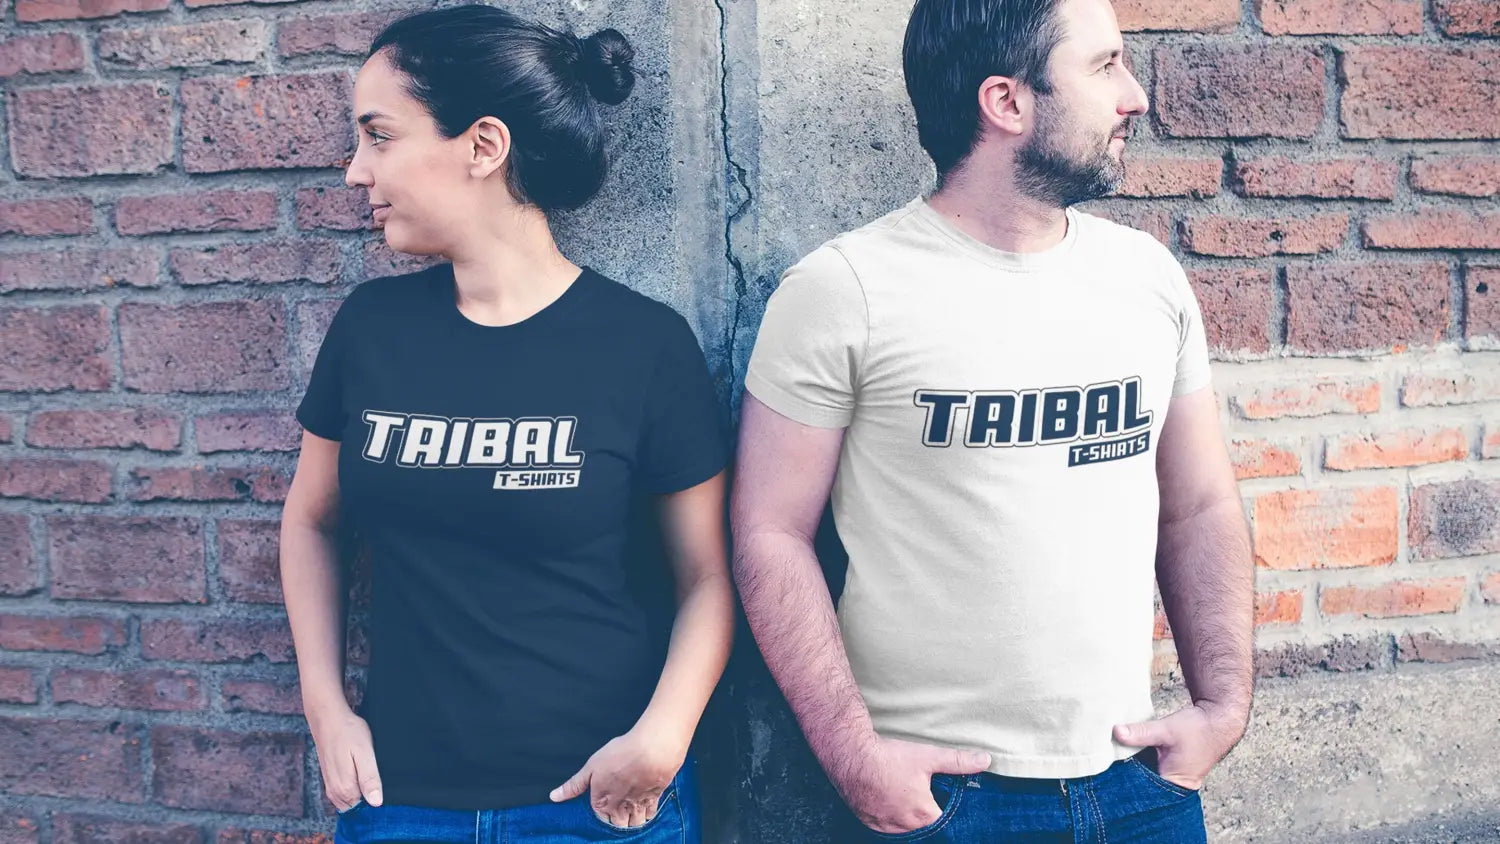 tribal t shirts qulity clothing and fashion